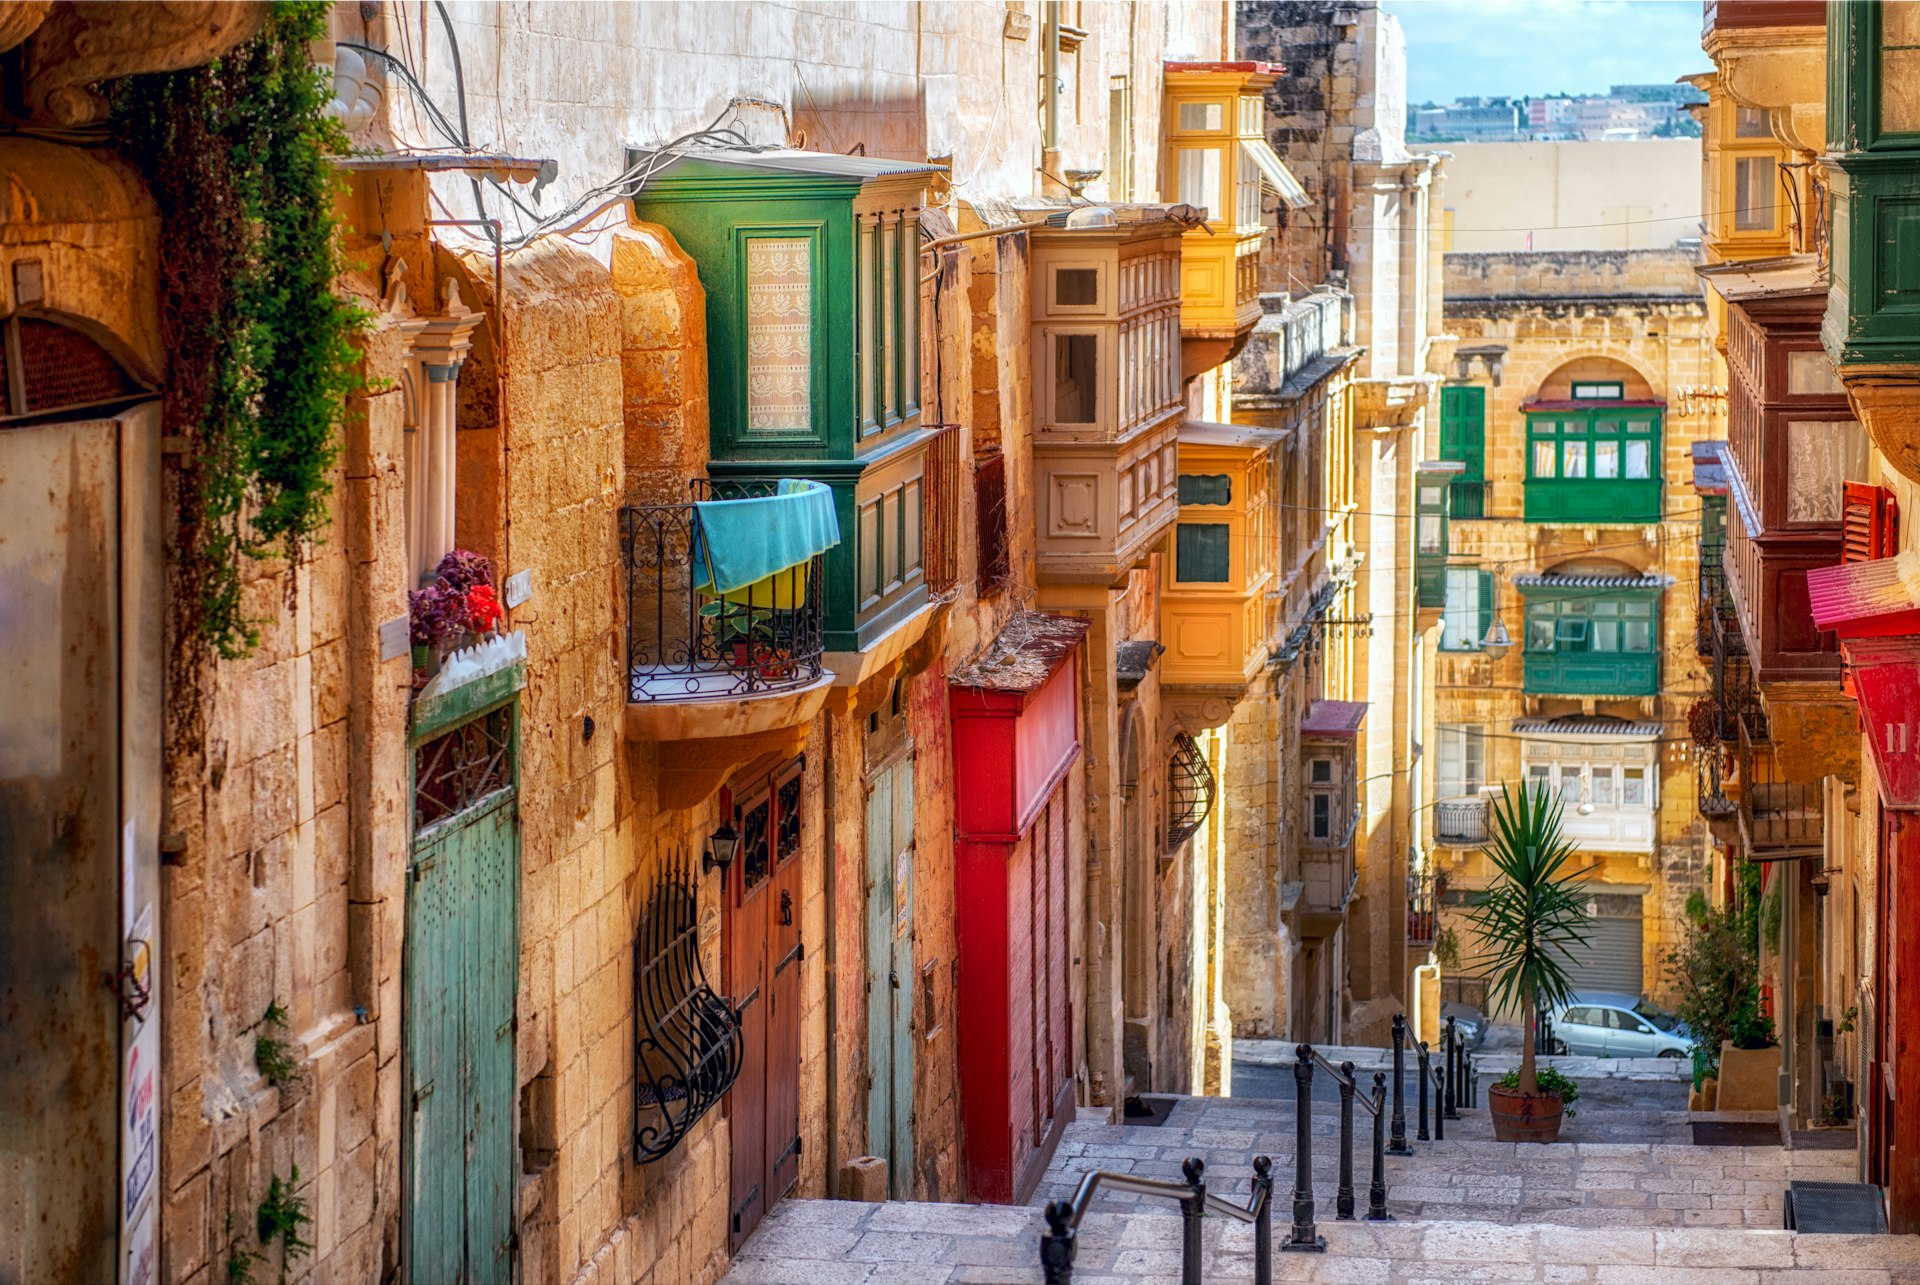 View down a narrow street in Valletta, the capital of Malta